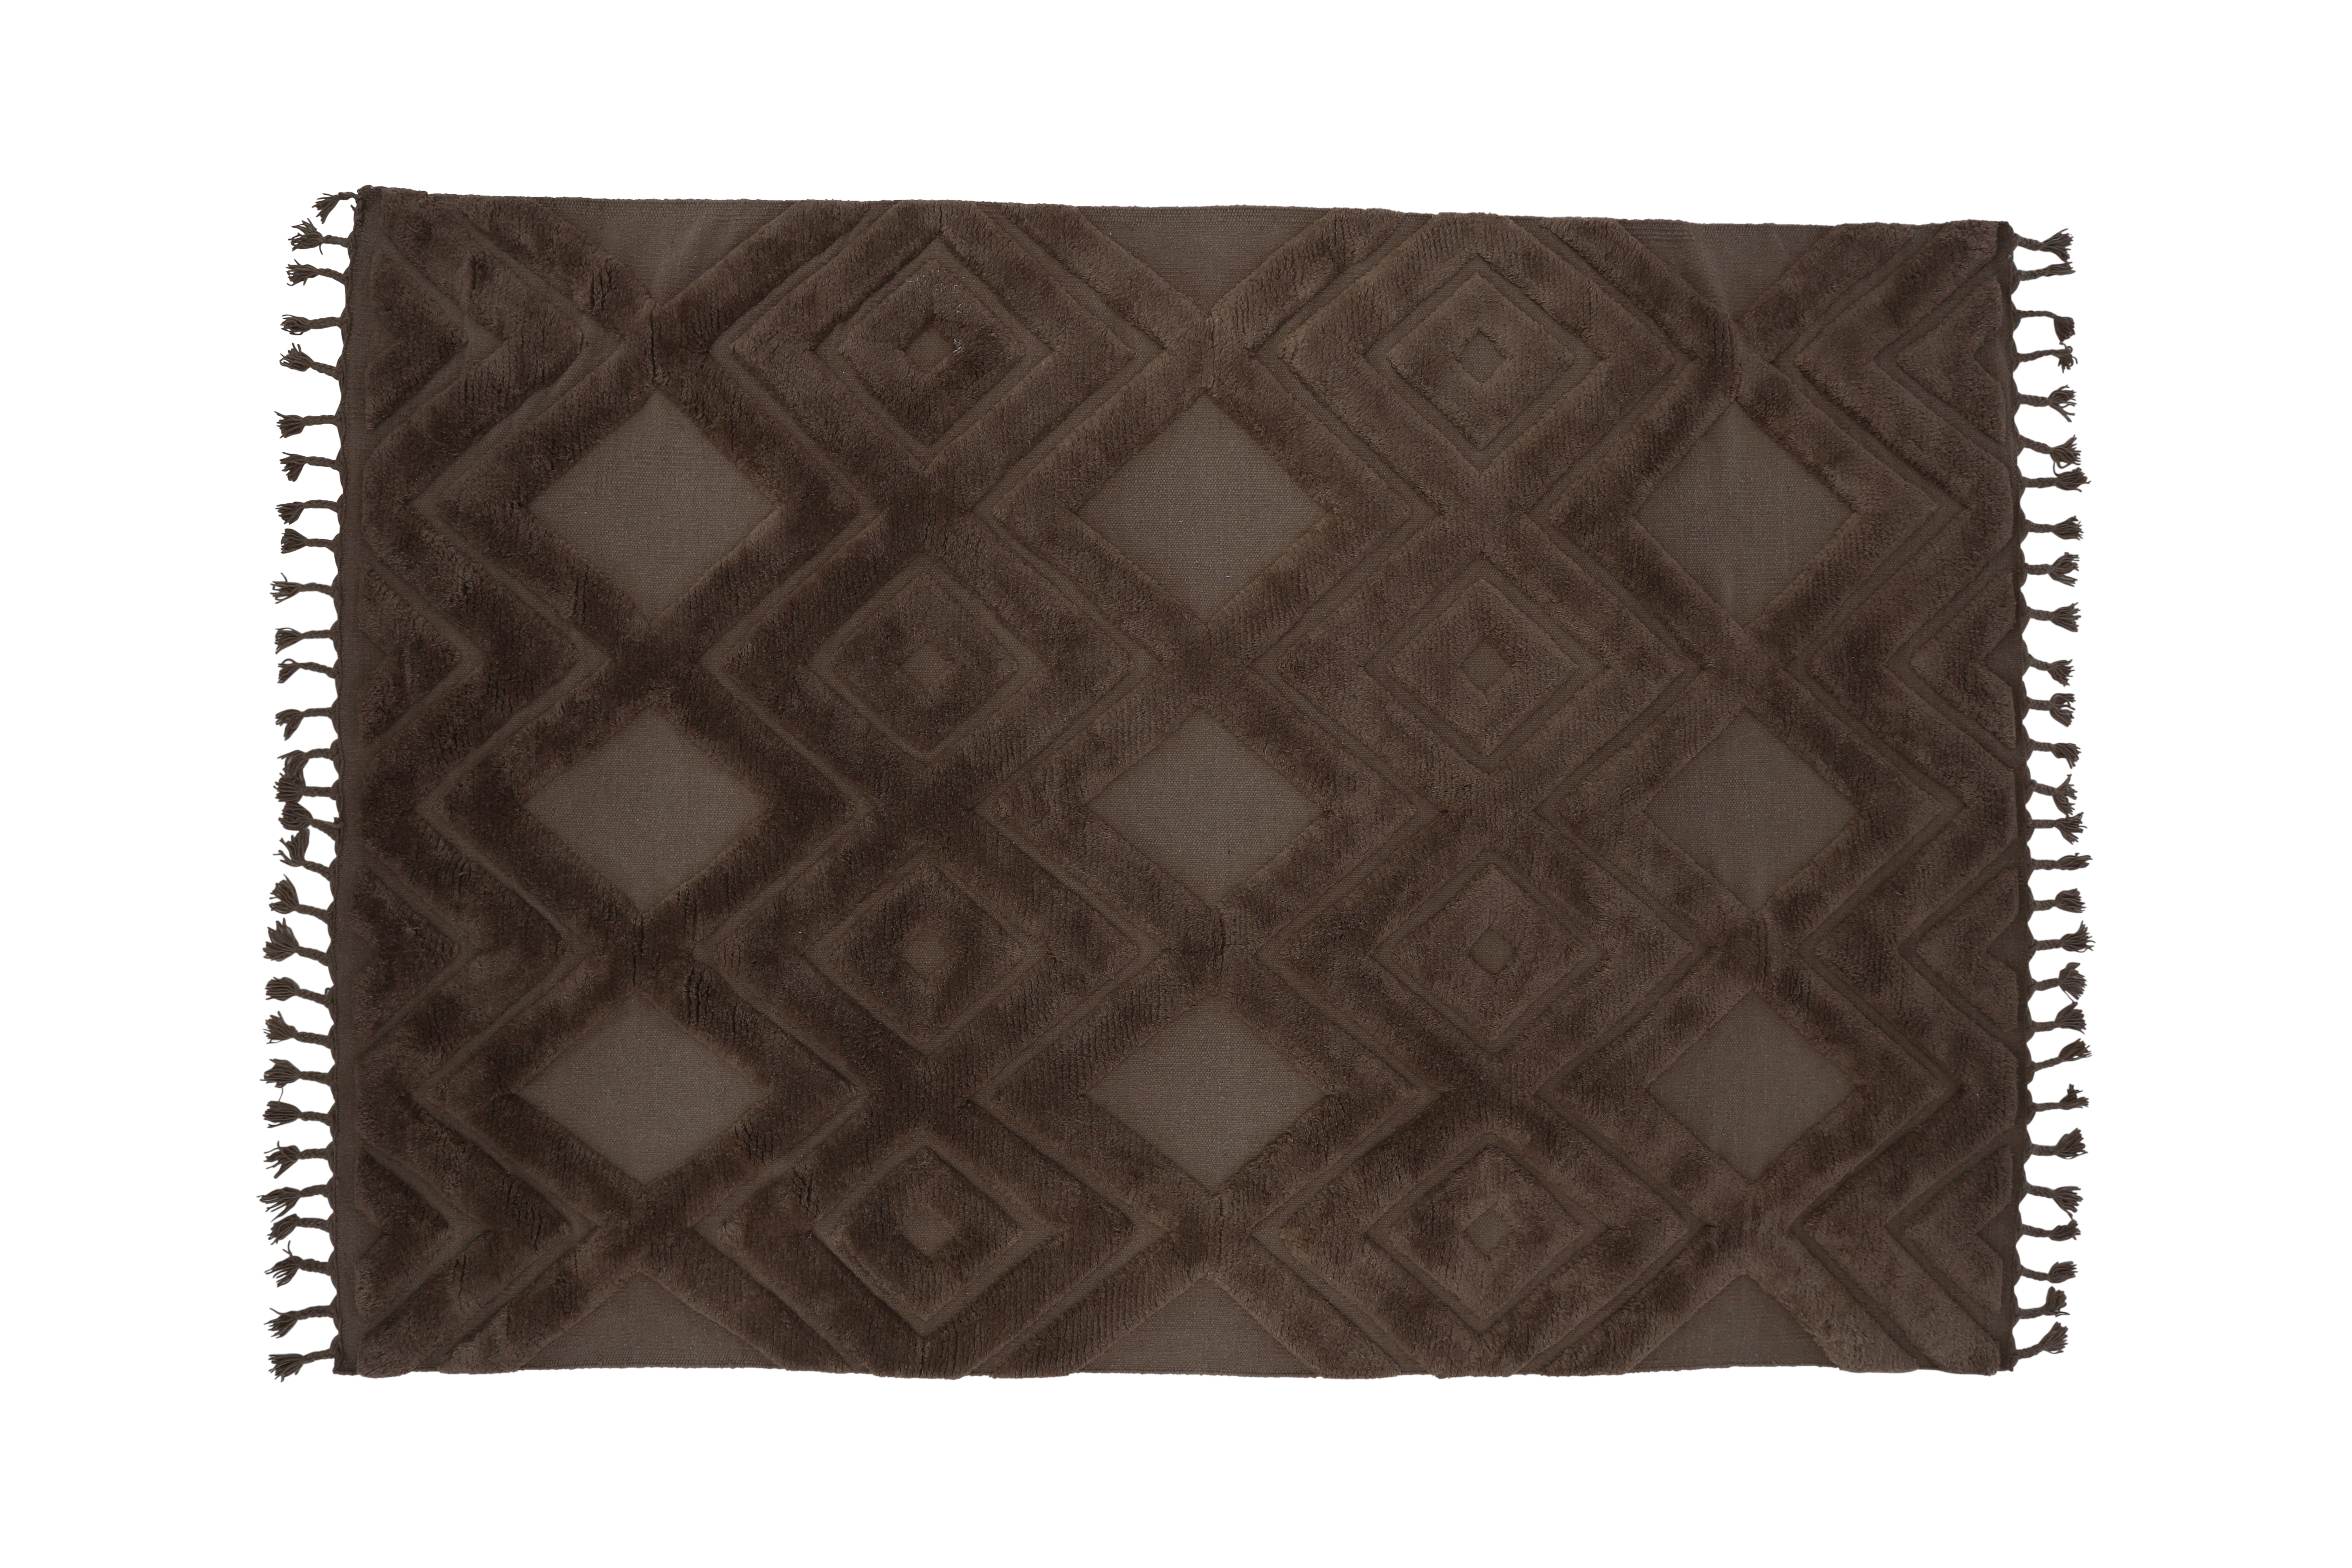 Billede af VIND COLLECTION Dahliawool gulvtæppe, rektangulær - brun nougat uld (300x200)